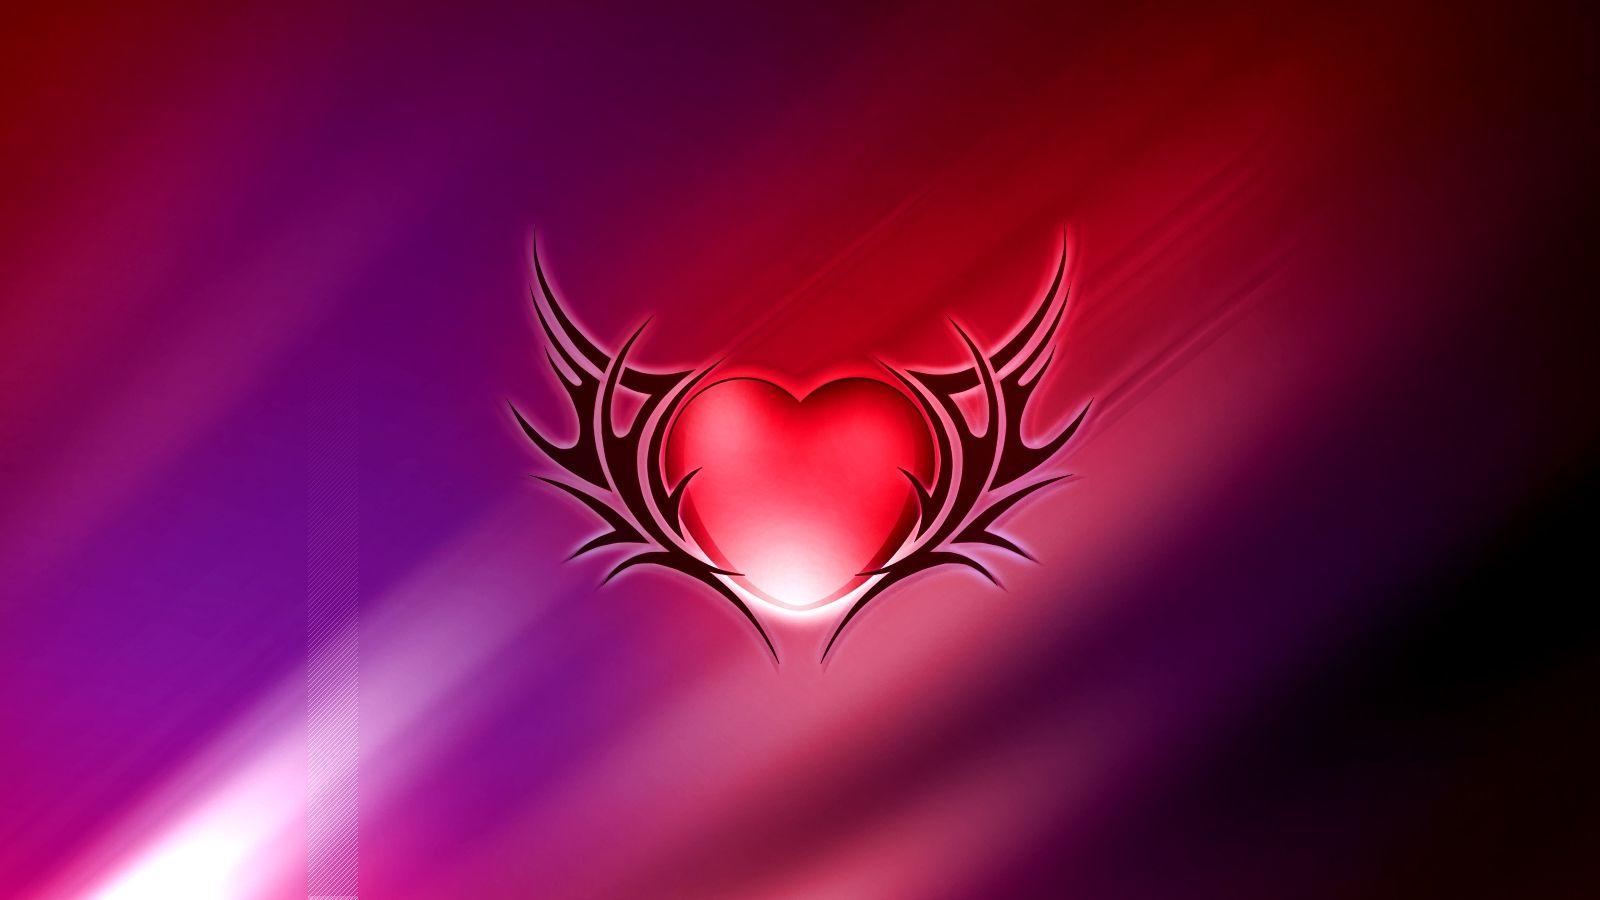 HD wallpaper red heart with wings clip art spots colorful love heart  Shape  Wallpaper Flare